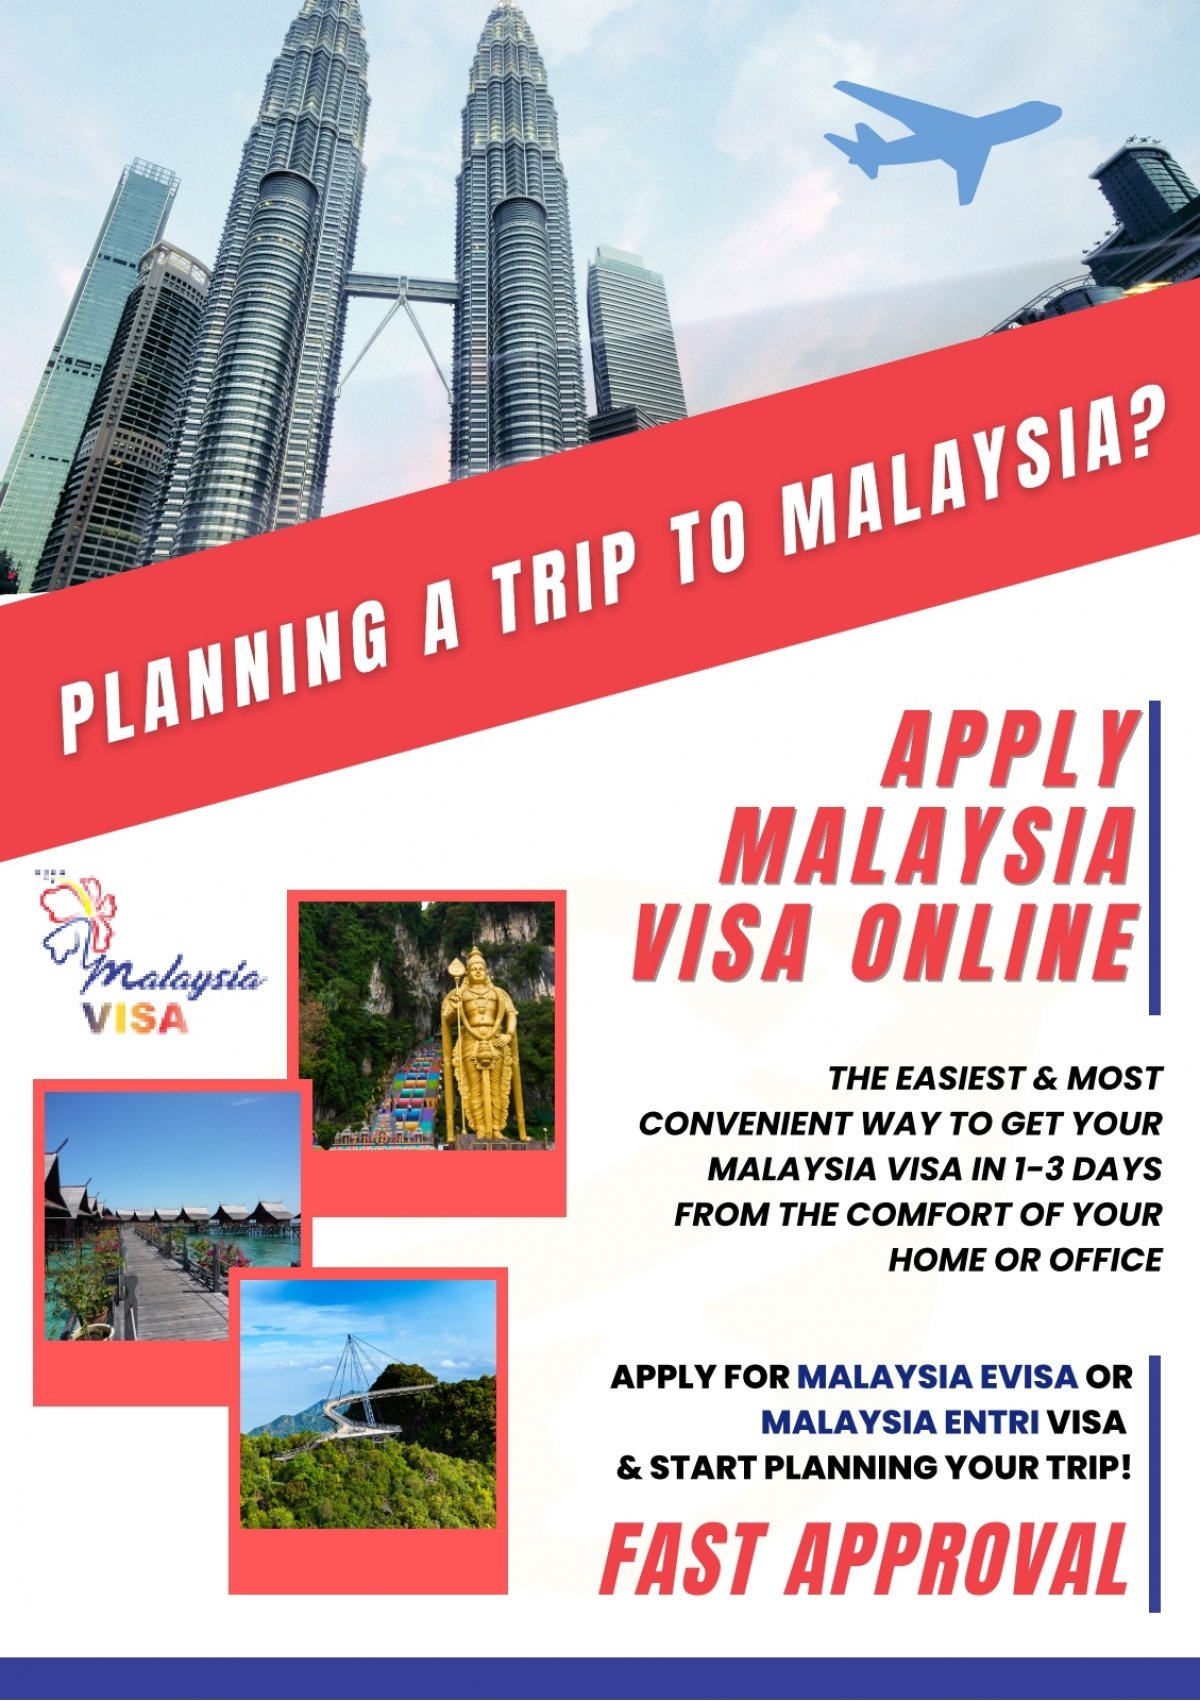 Malaysia Visa Online: Apply for Malaysia eVISA or ENTRI Visa